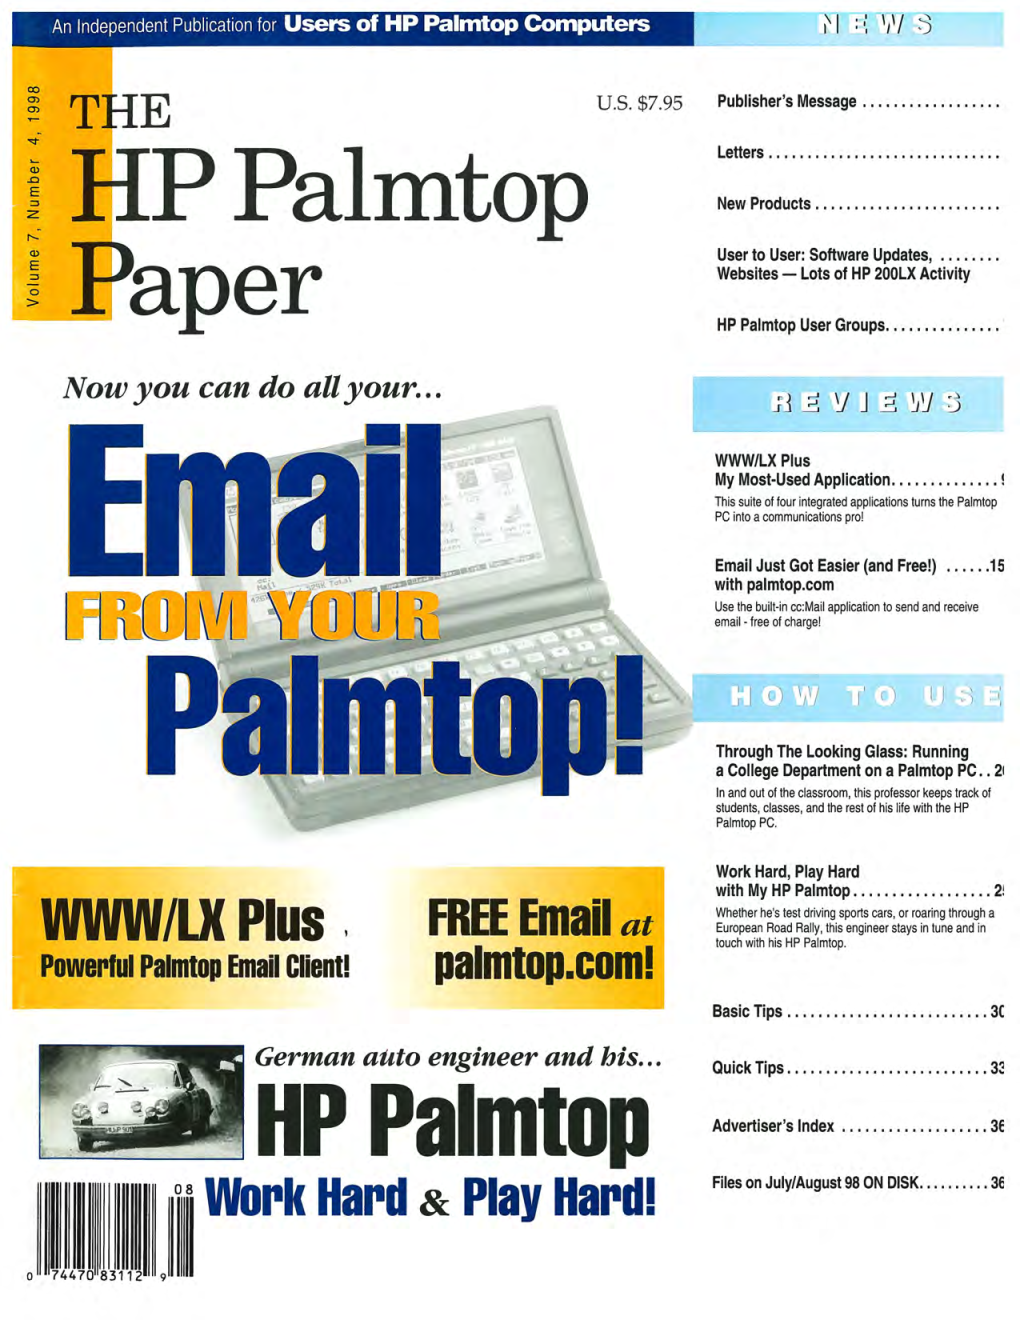 Ppalmtop Q.L User to User: Software Updates,